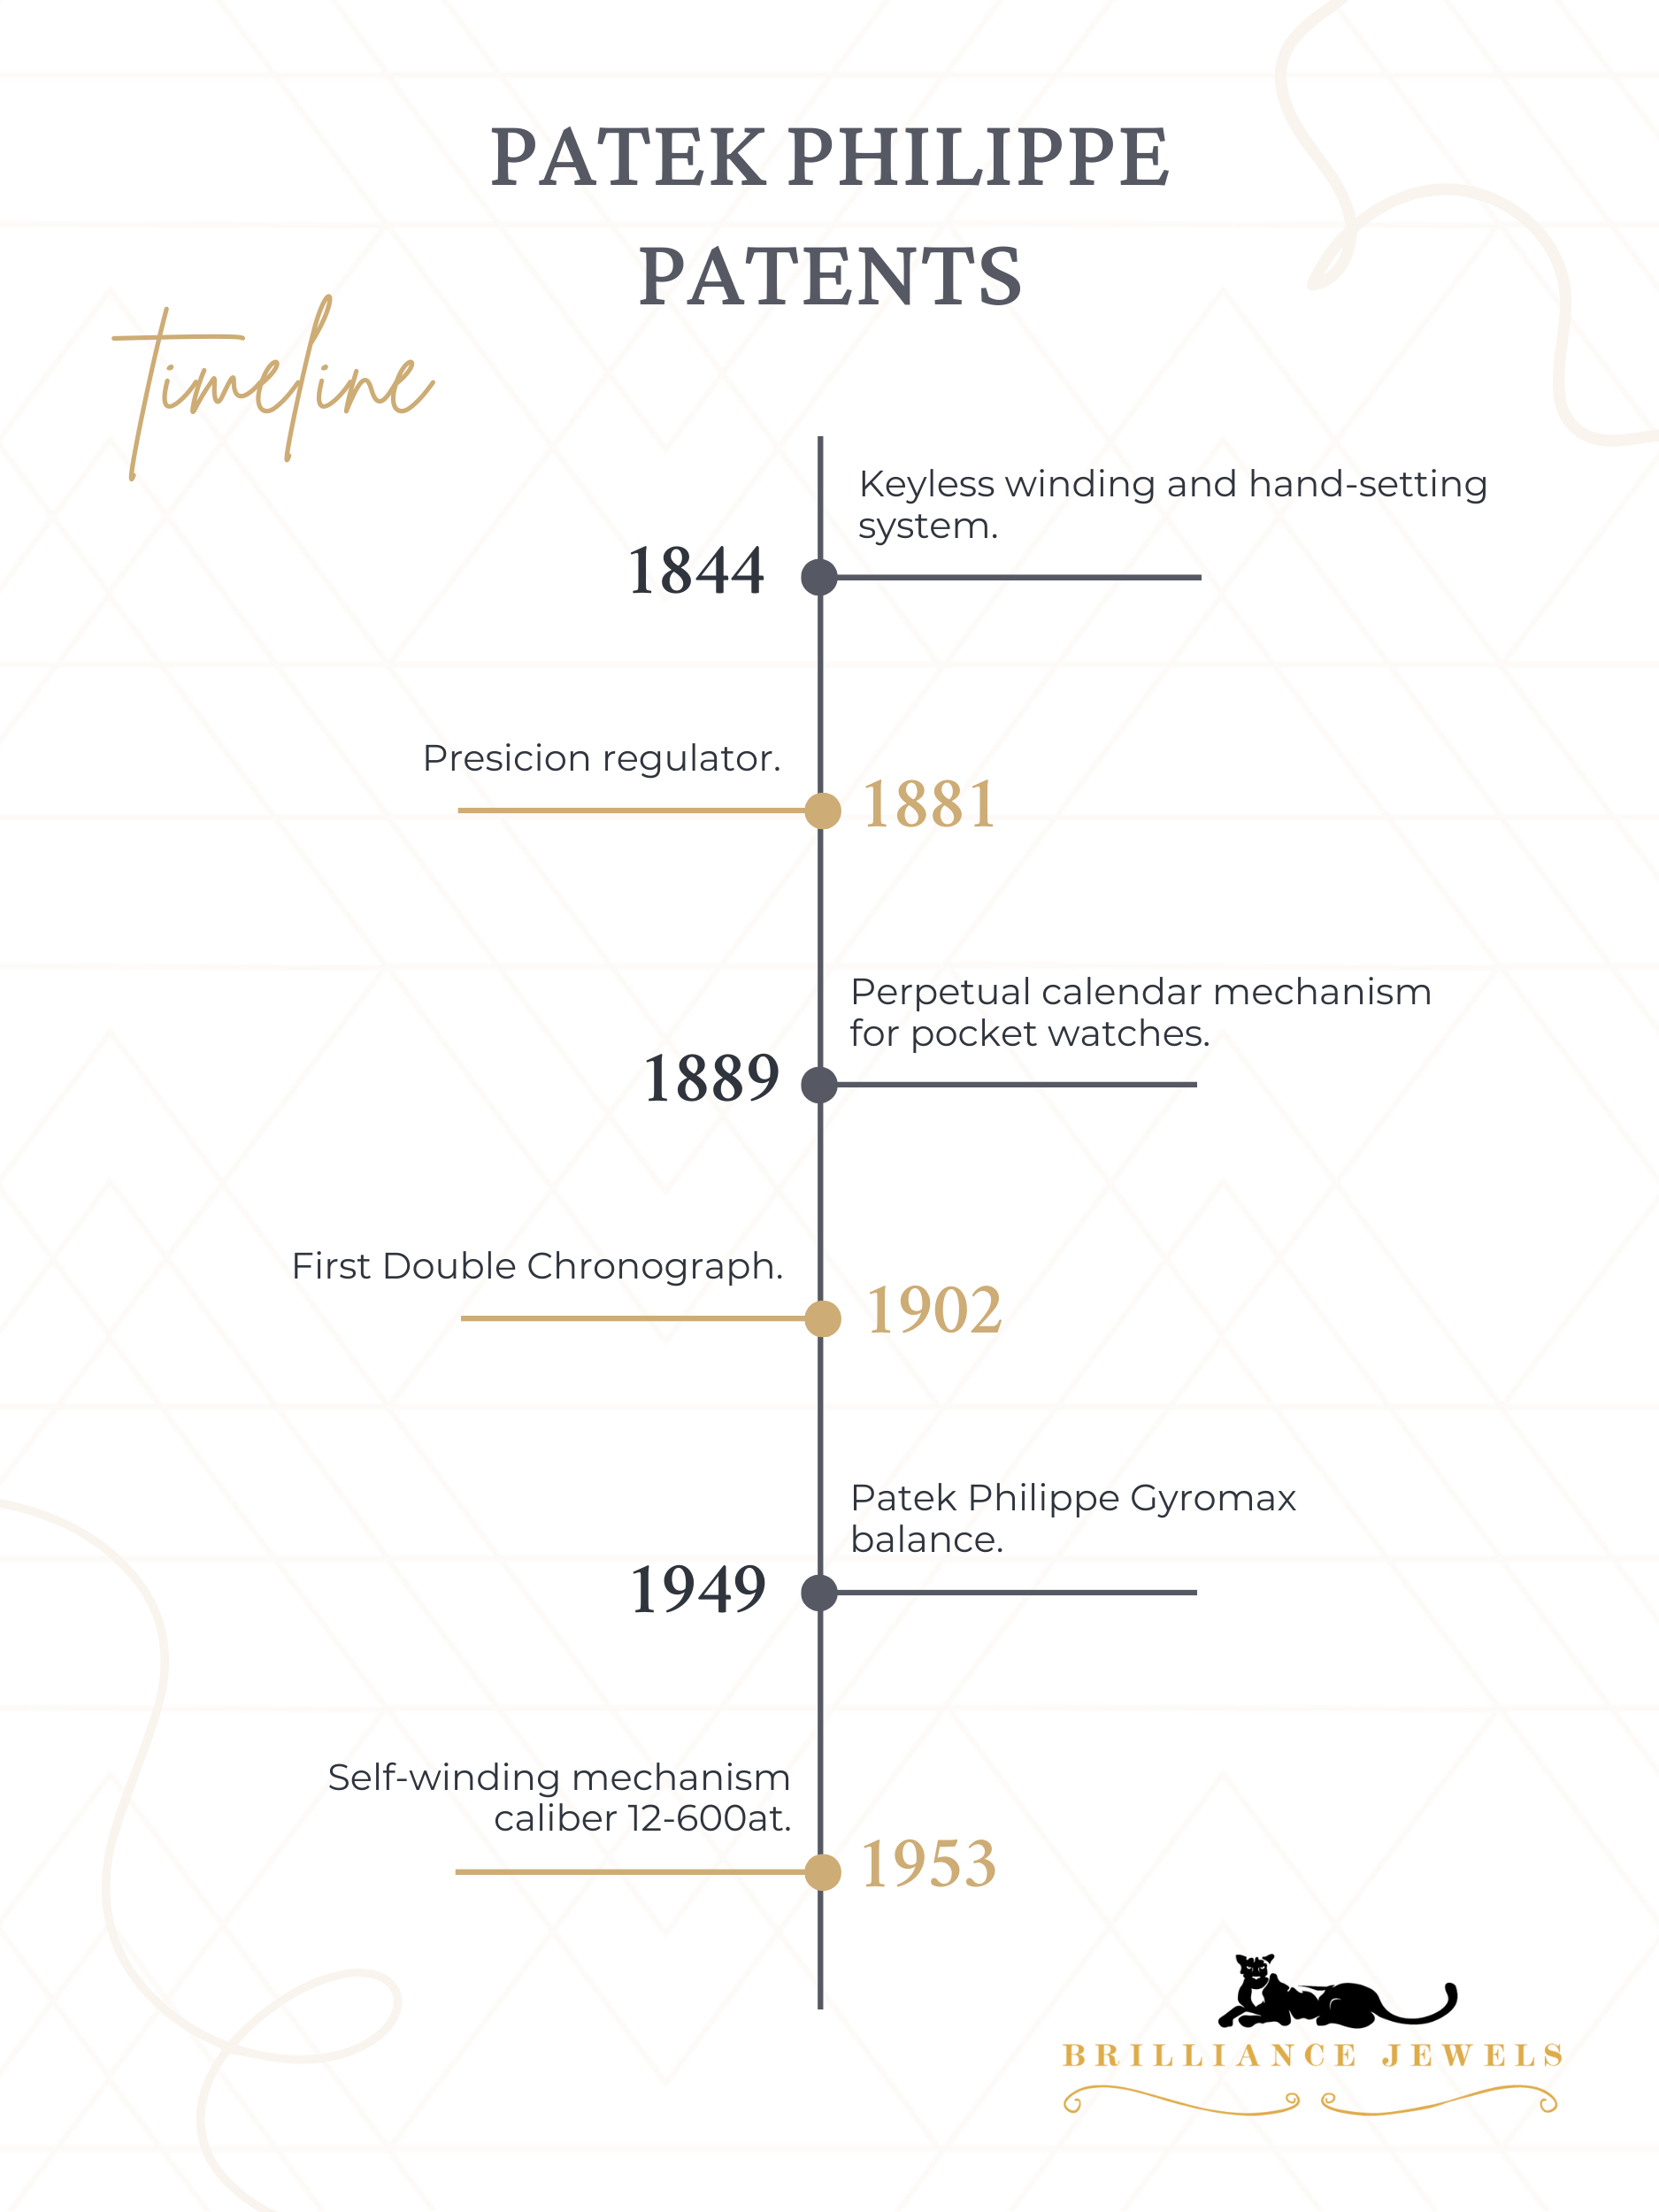 Patek Philippe Patents Timeline - 1